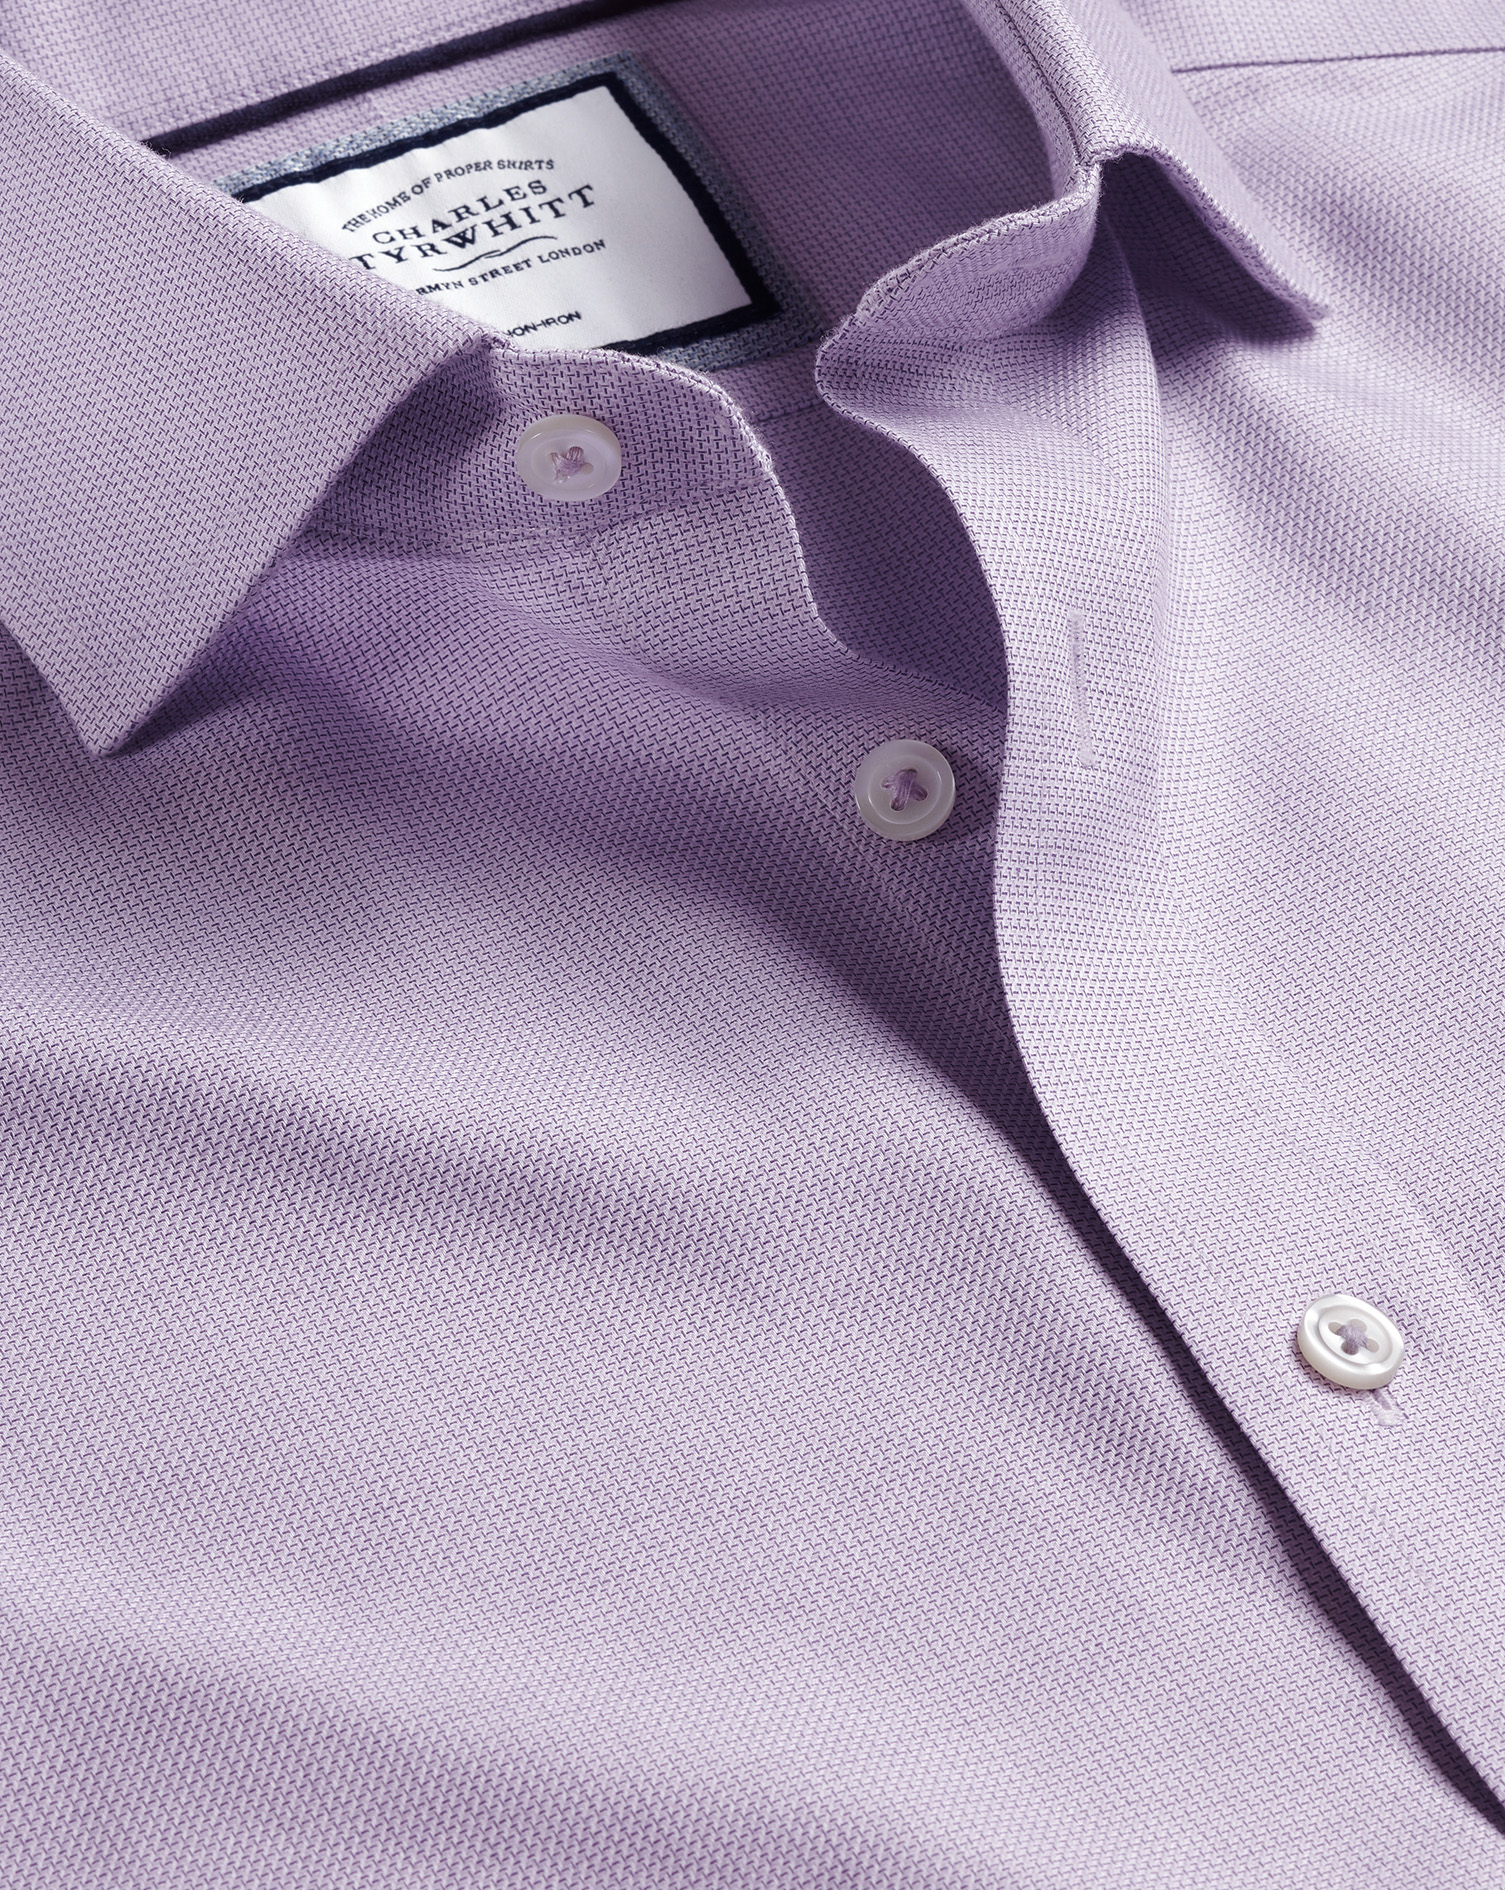 Men's Charles Tyrwhitt Cutaway Collar Non-Iron Richmond Weave Dress Shirt - Mauve Purple Single Cuff